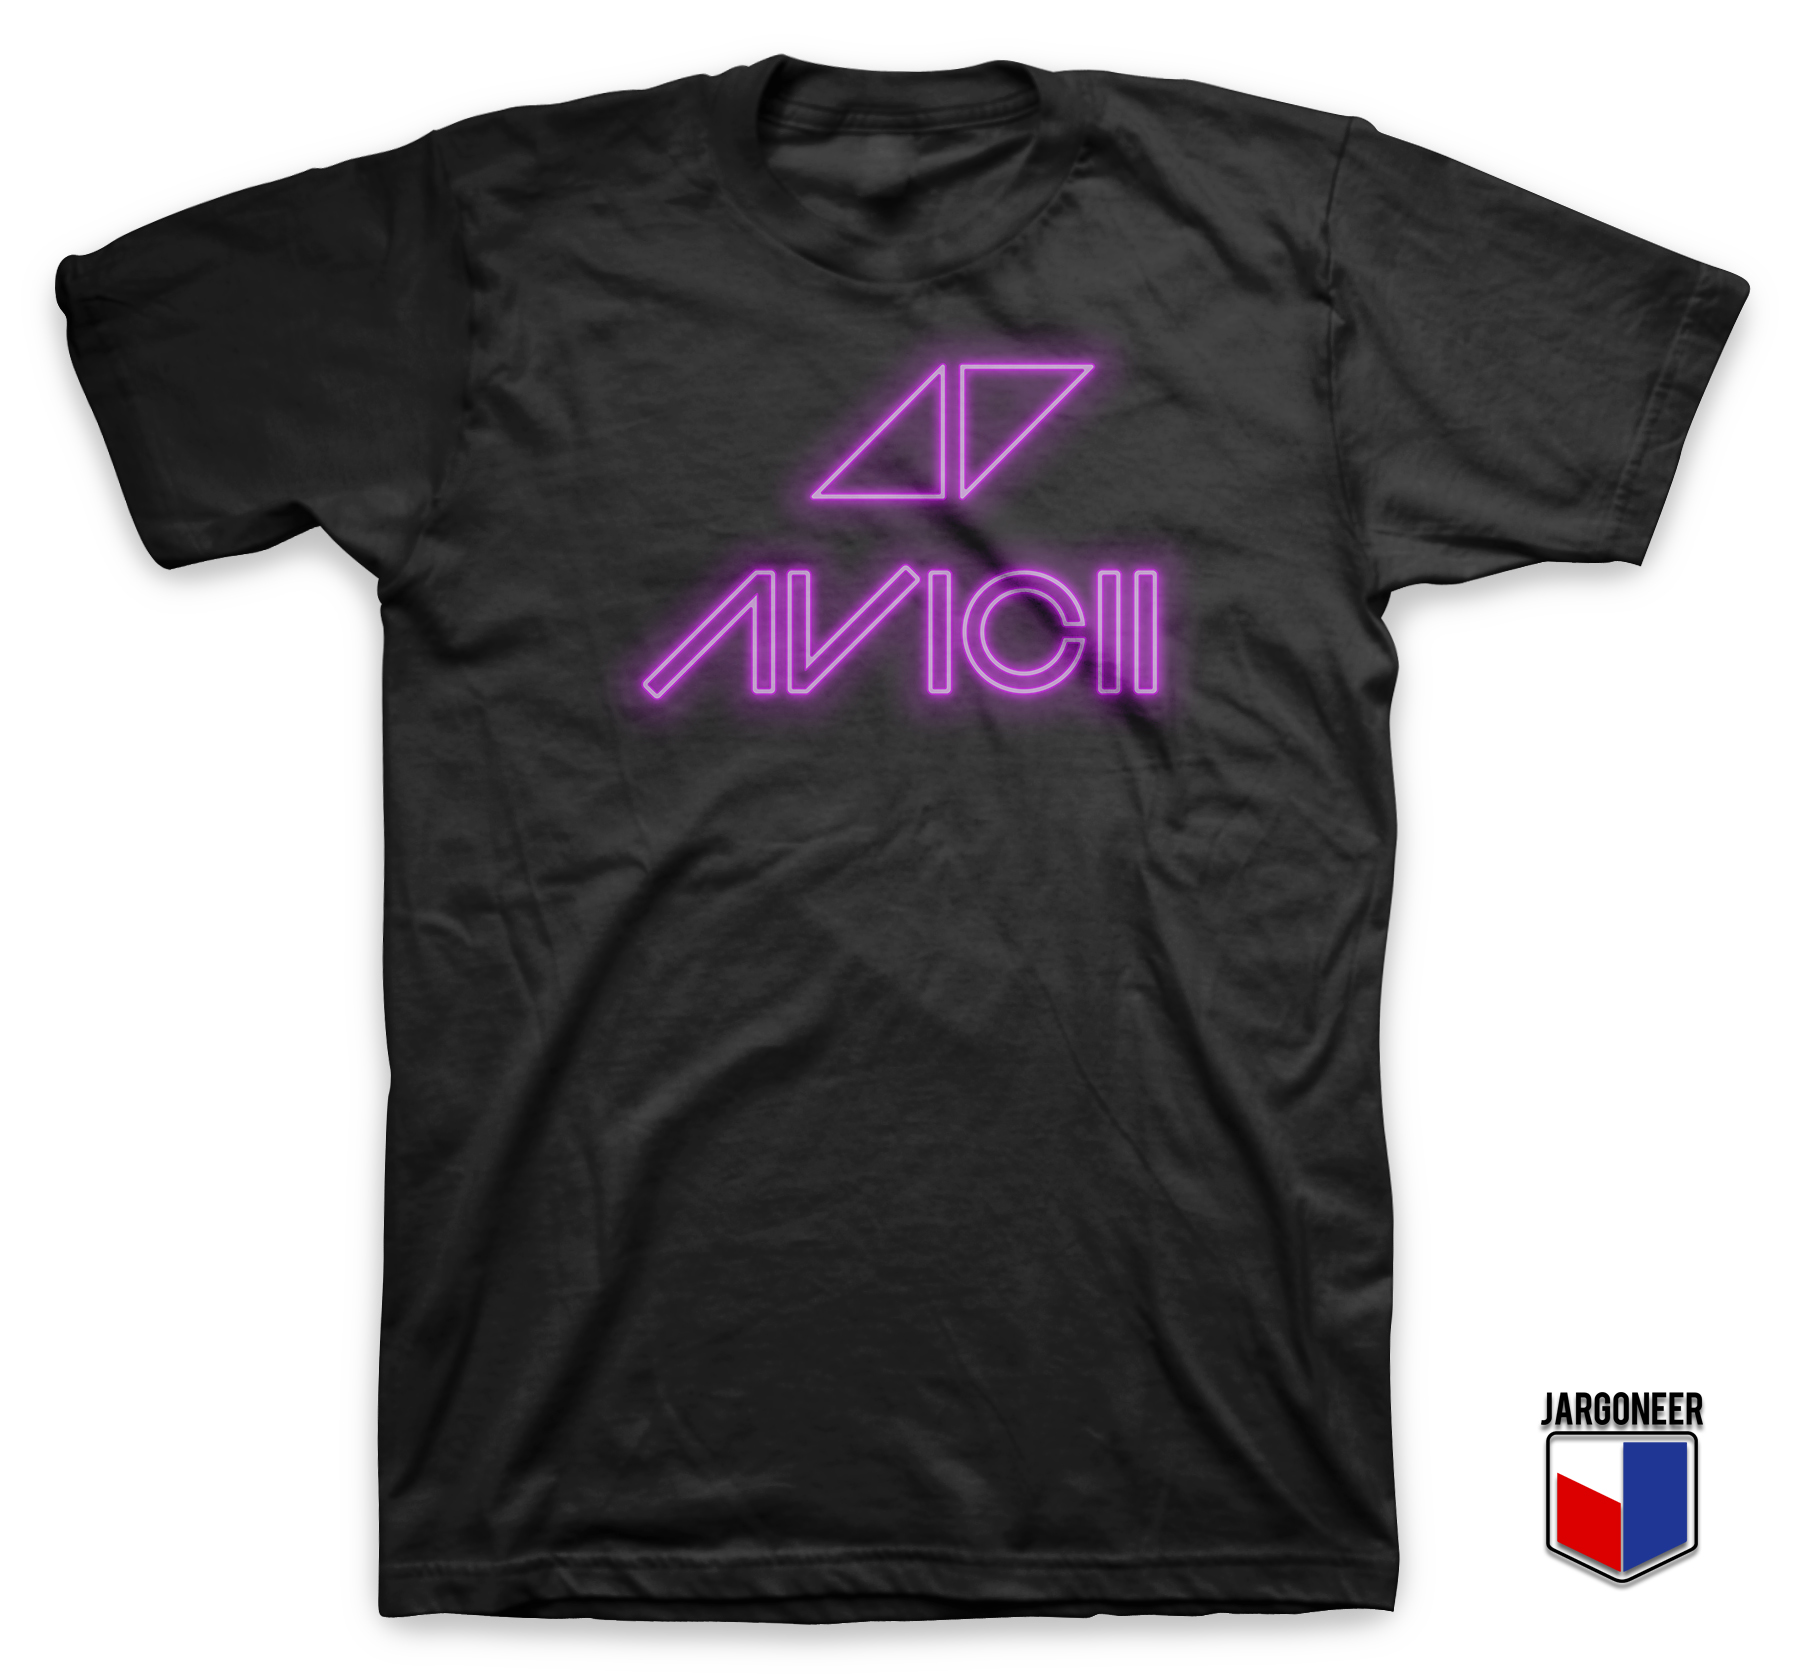 Avicii Neon Logo Black - Shop Unique Graphic Cool Shirt Designs